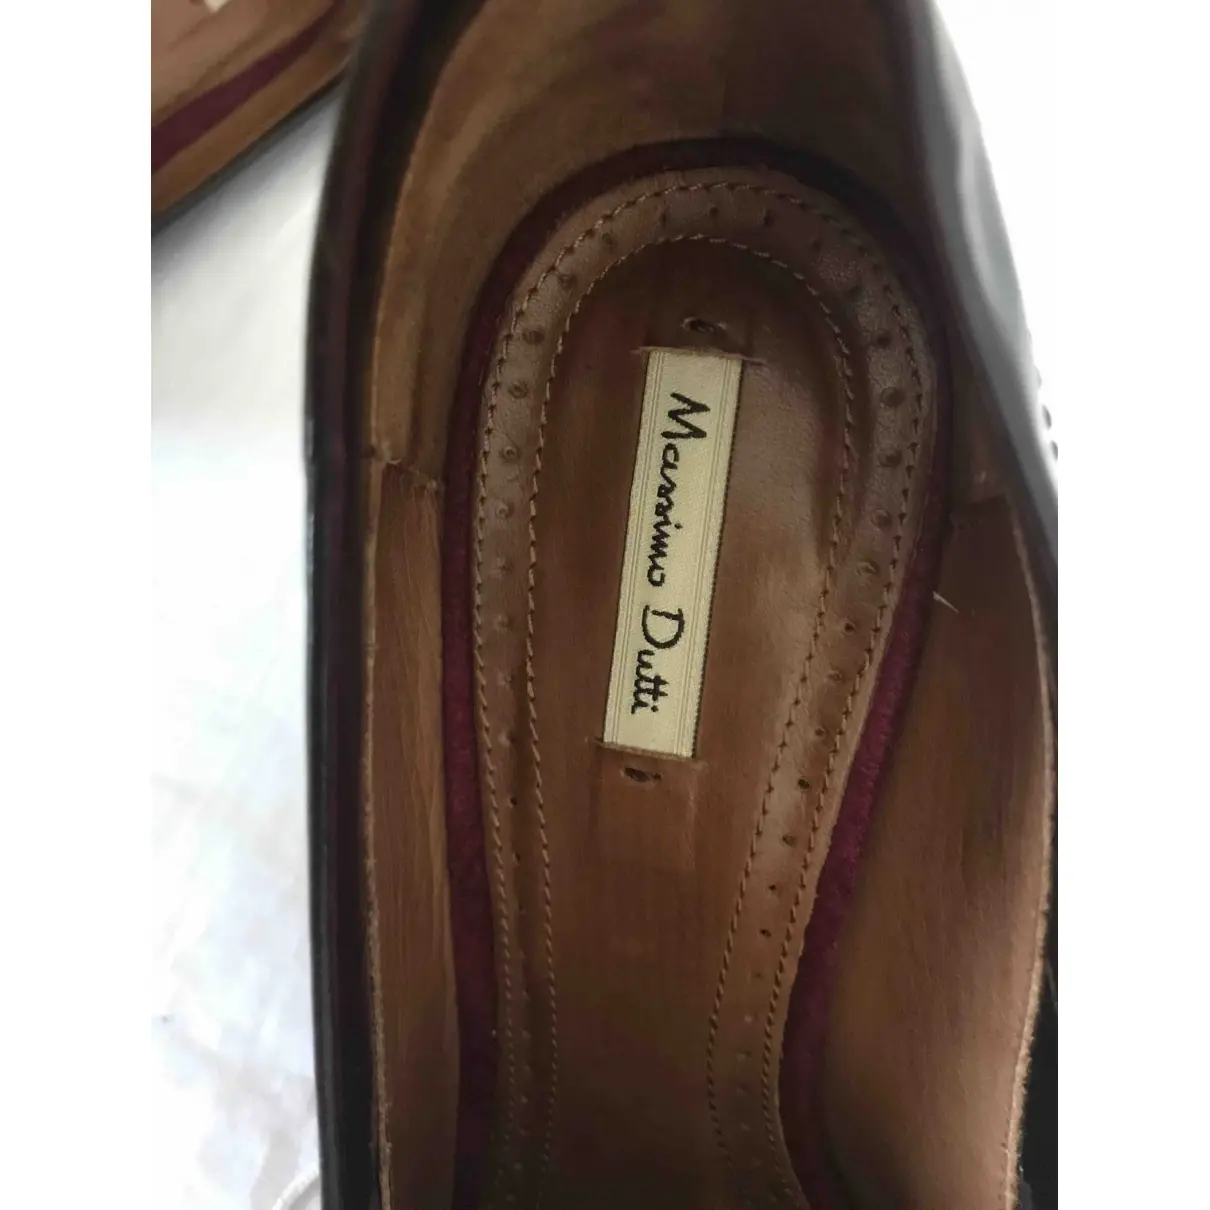 Leather heels Massimo Dutti